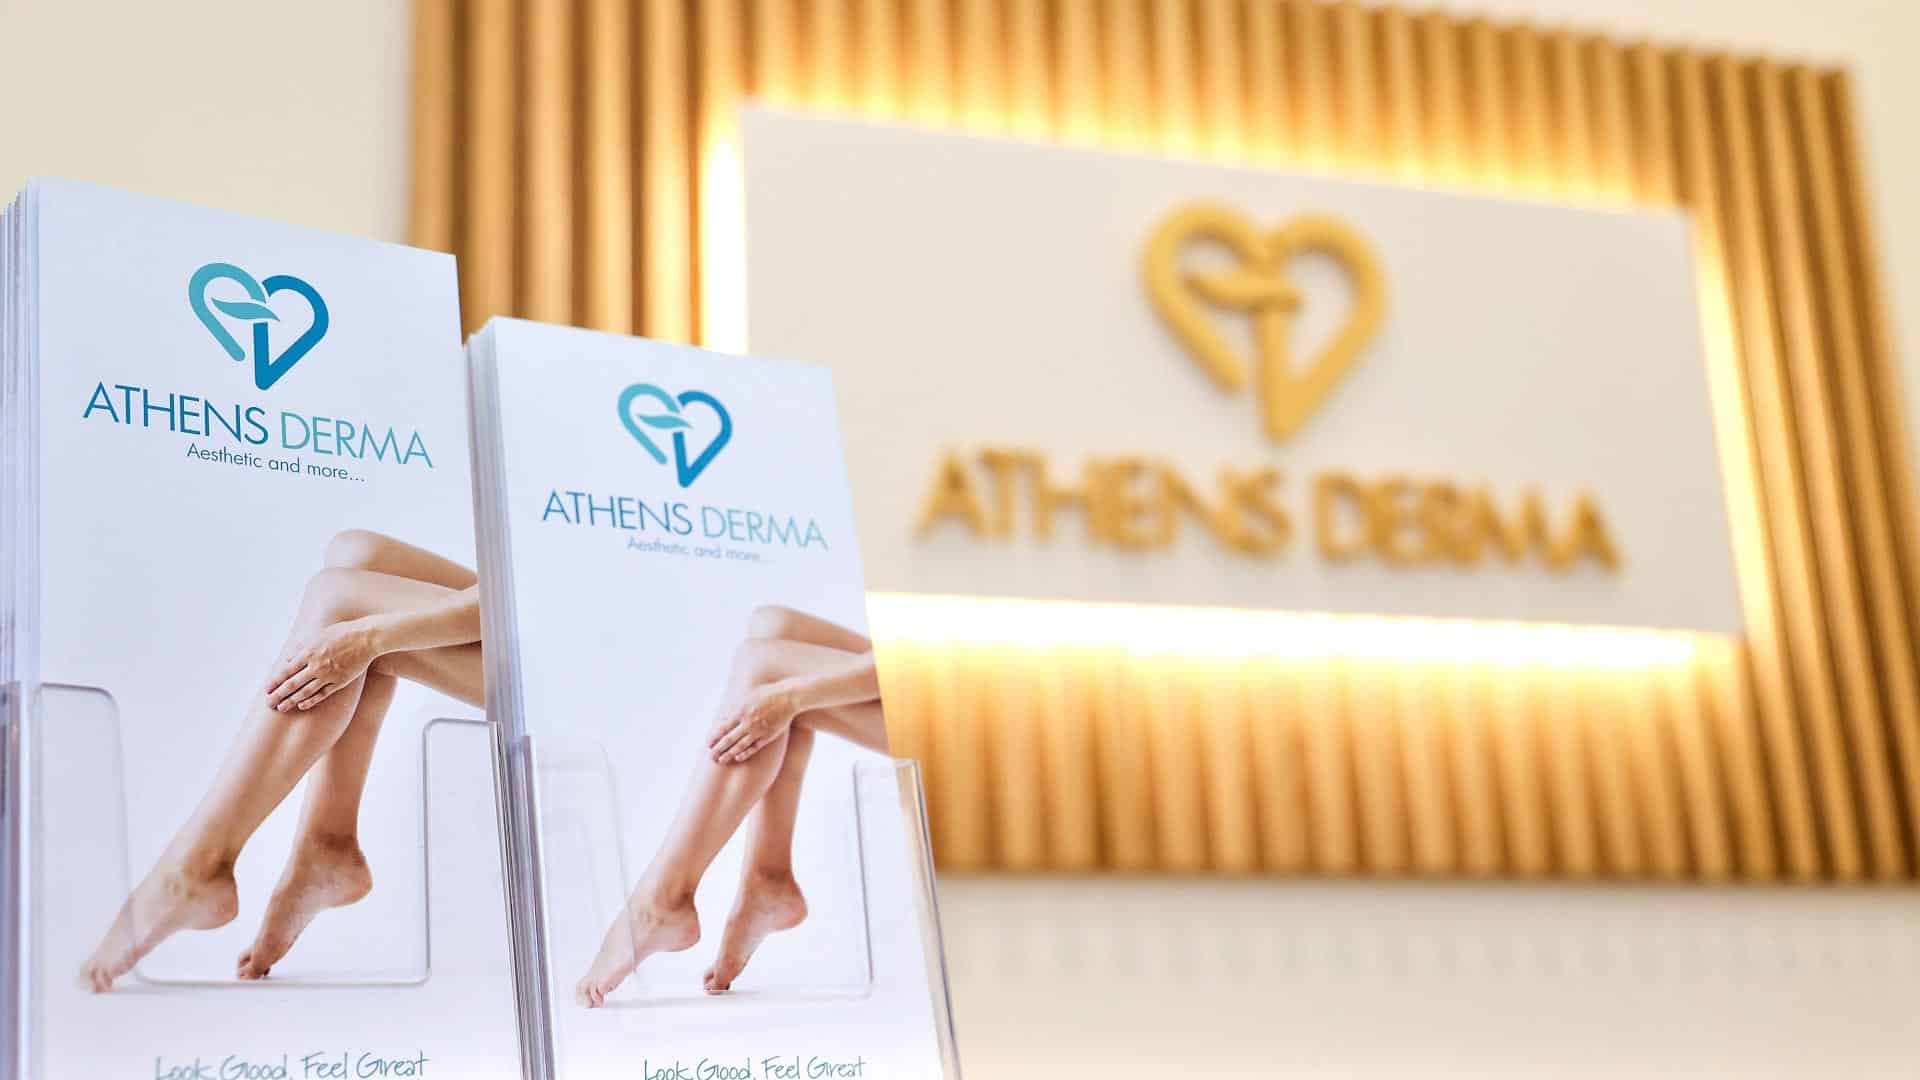 ATHENS DERMA: Λαμπερά εγκαίνια στο νέο χώρο ομορφιάς στο κέντρο της Αθήνας